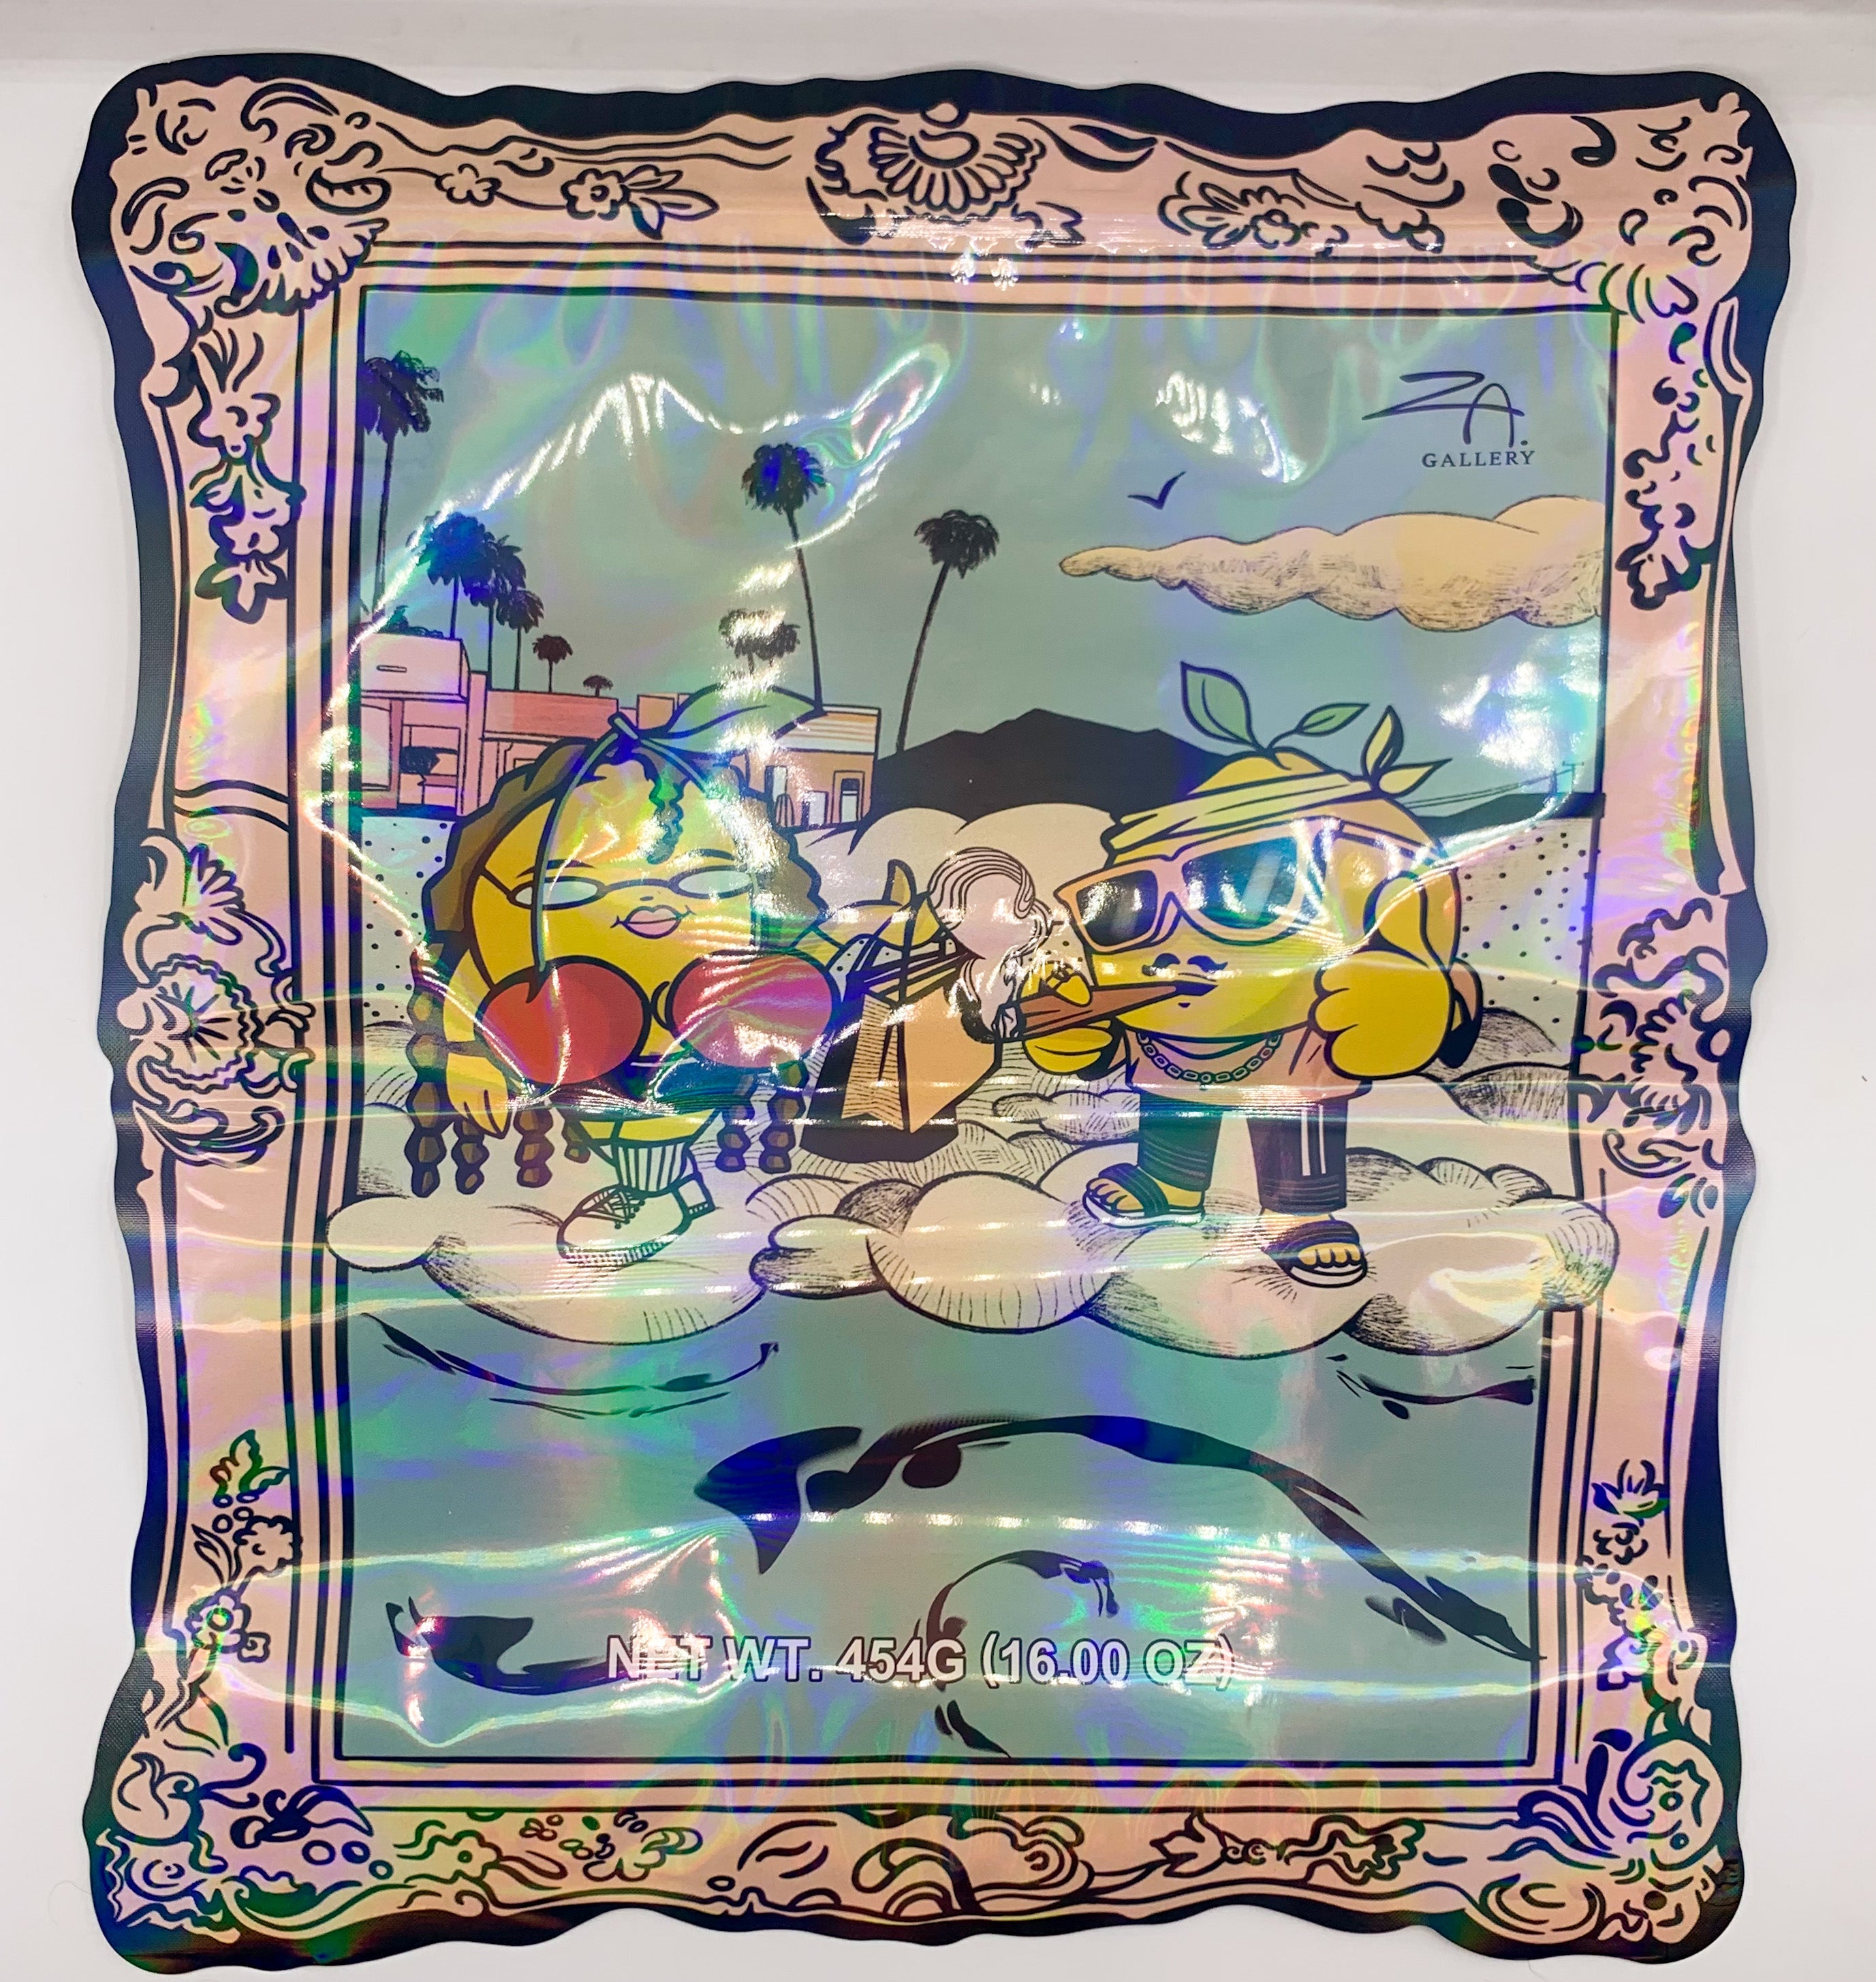 3D ZA Gallery Lemon Cherry 1 Pound (16oz) Mylar Bags